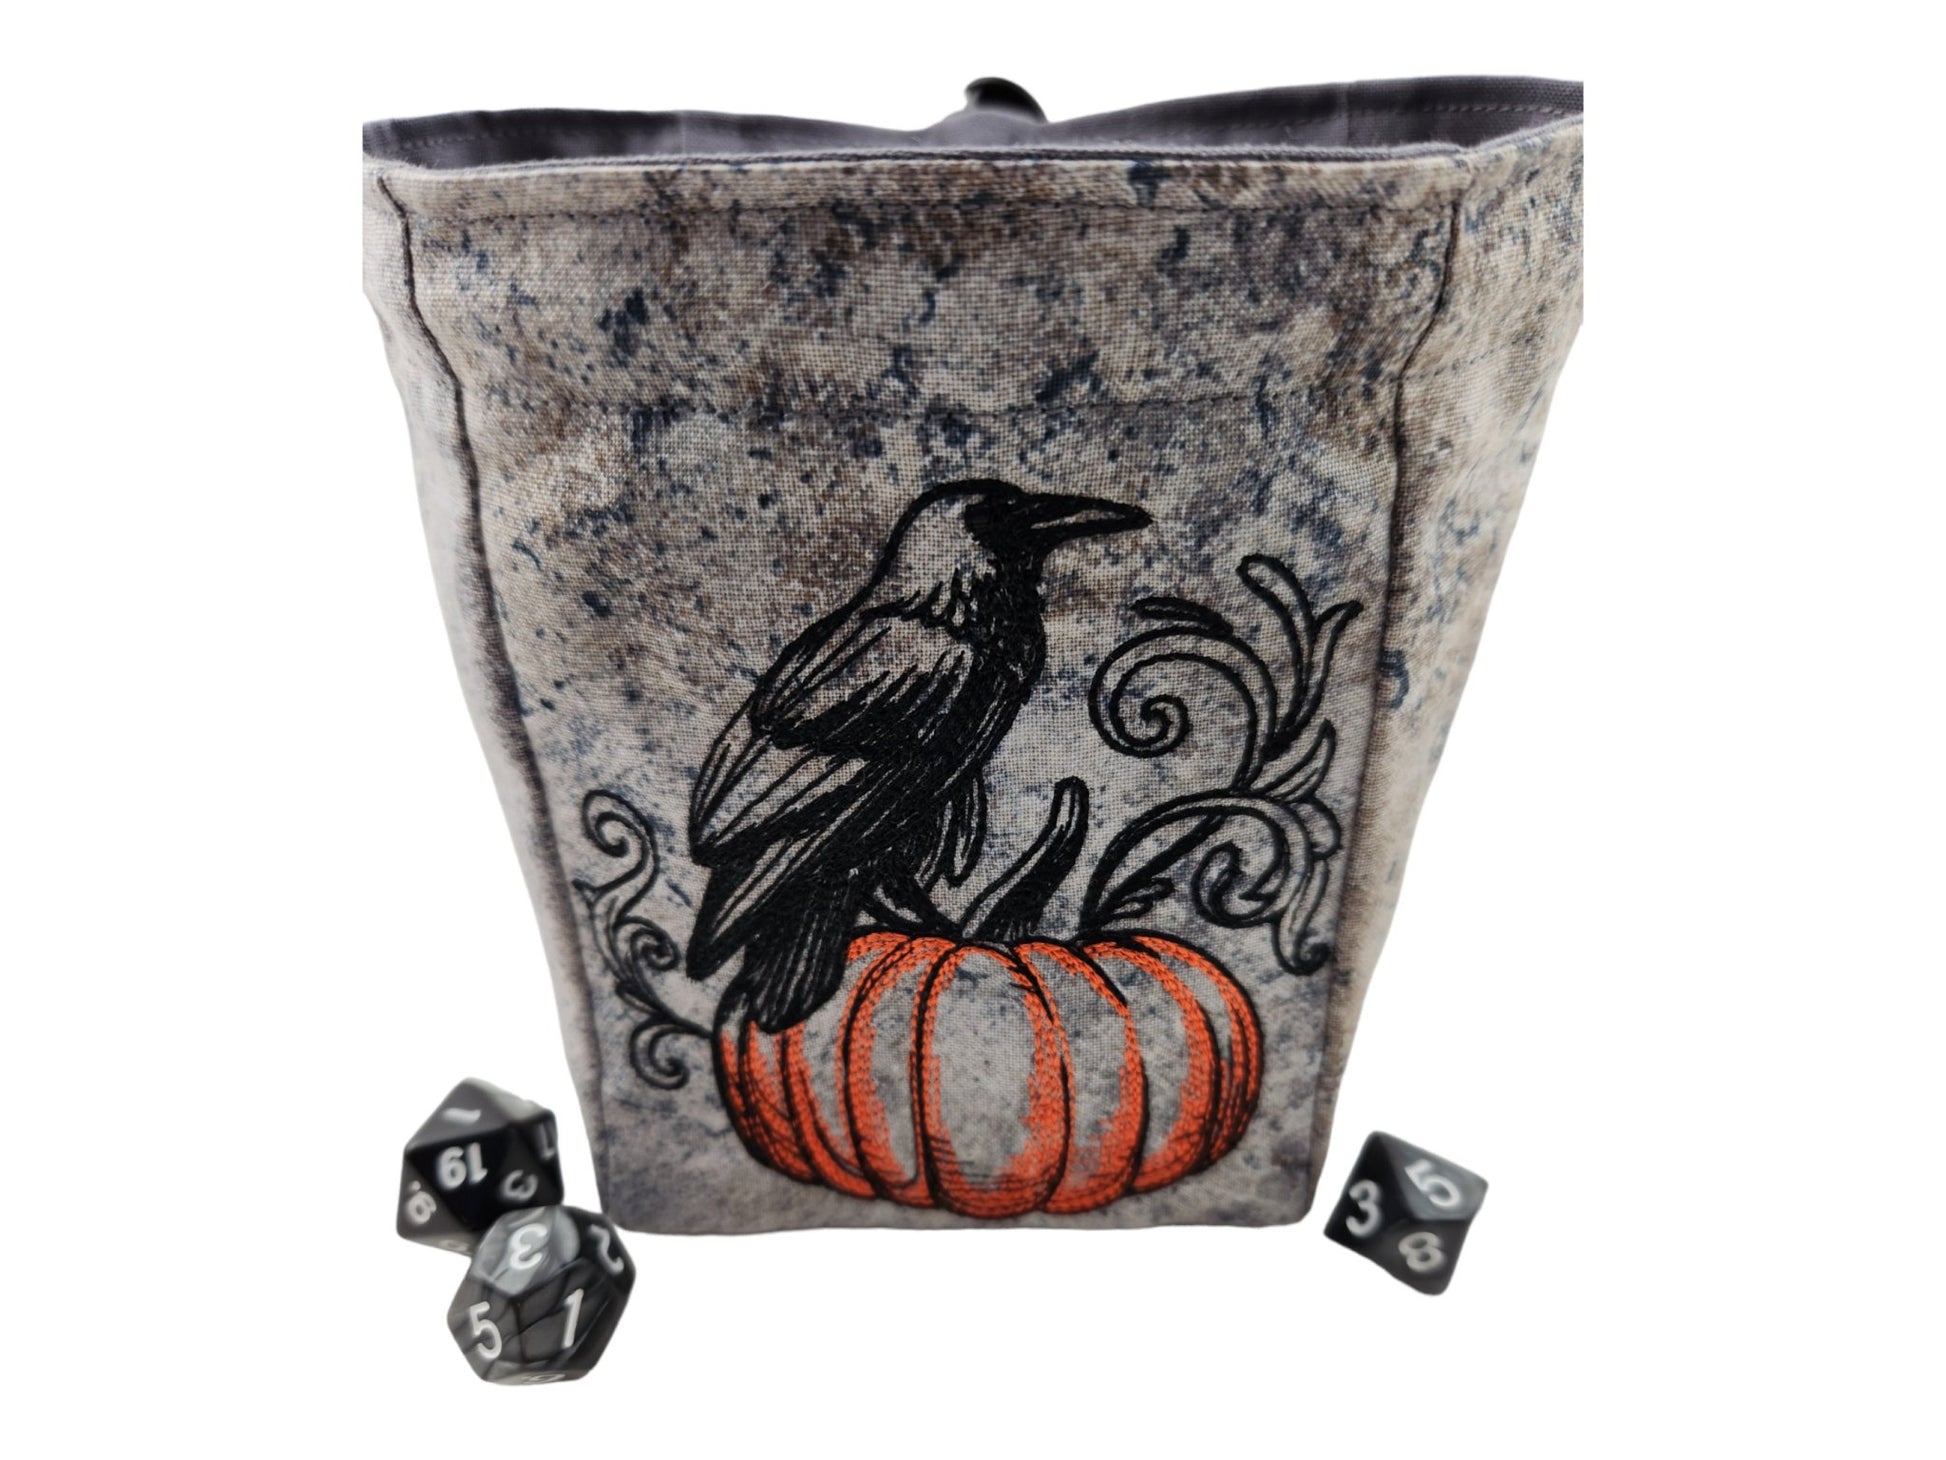 Autumn raven dice bag - Rowan Gate